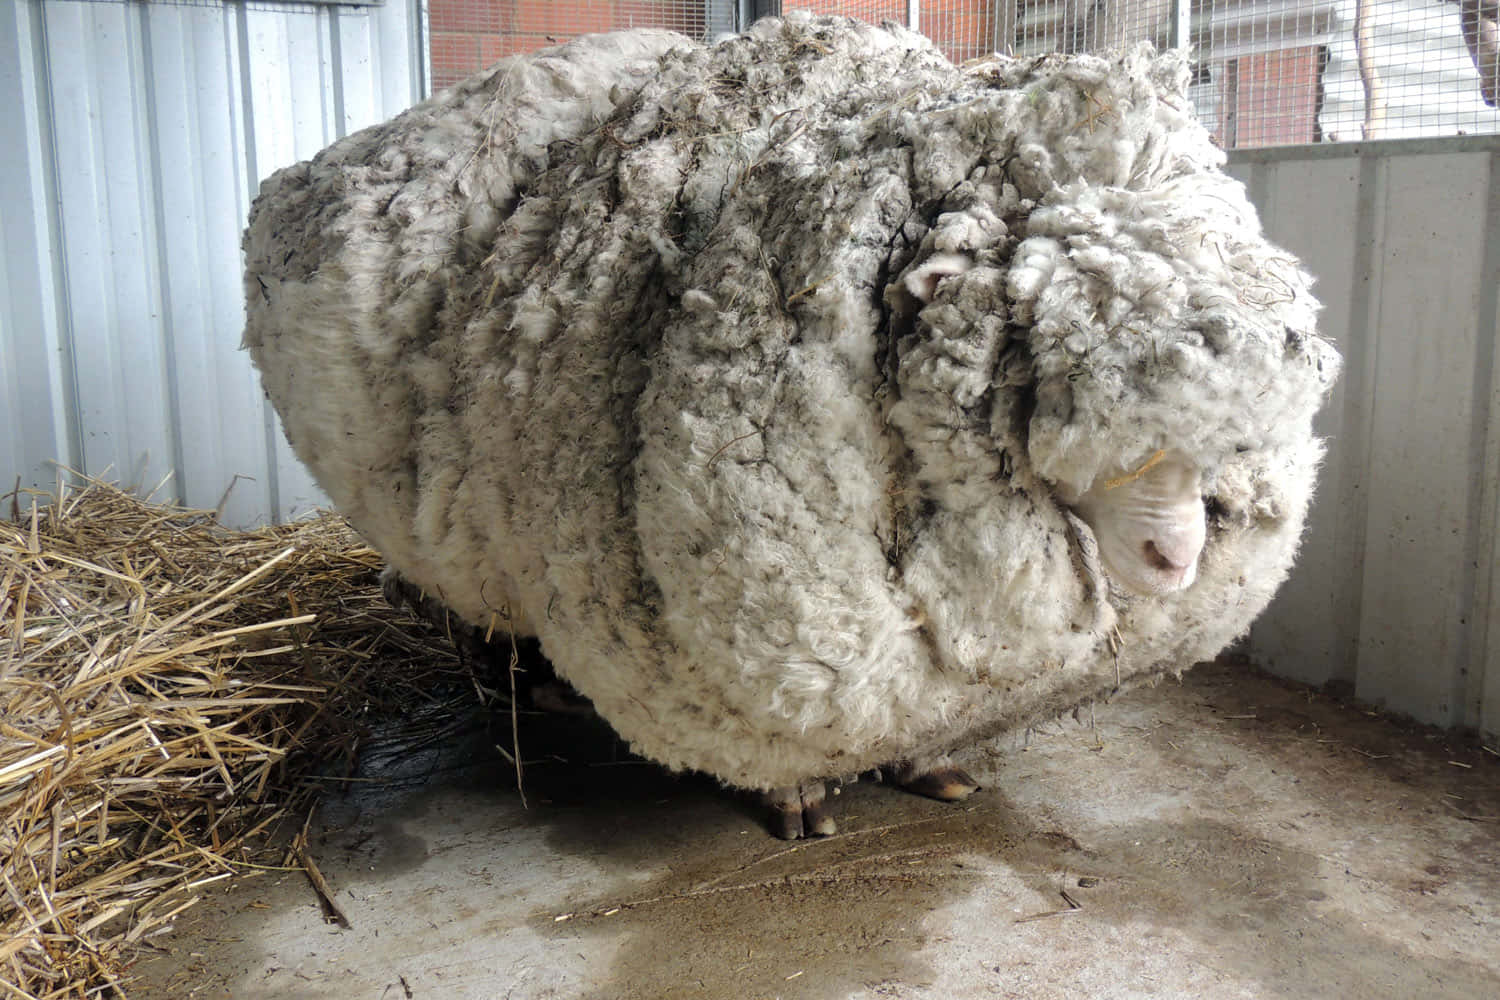 A Sheep In A Barn